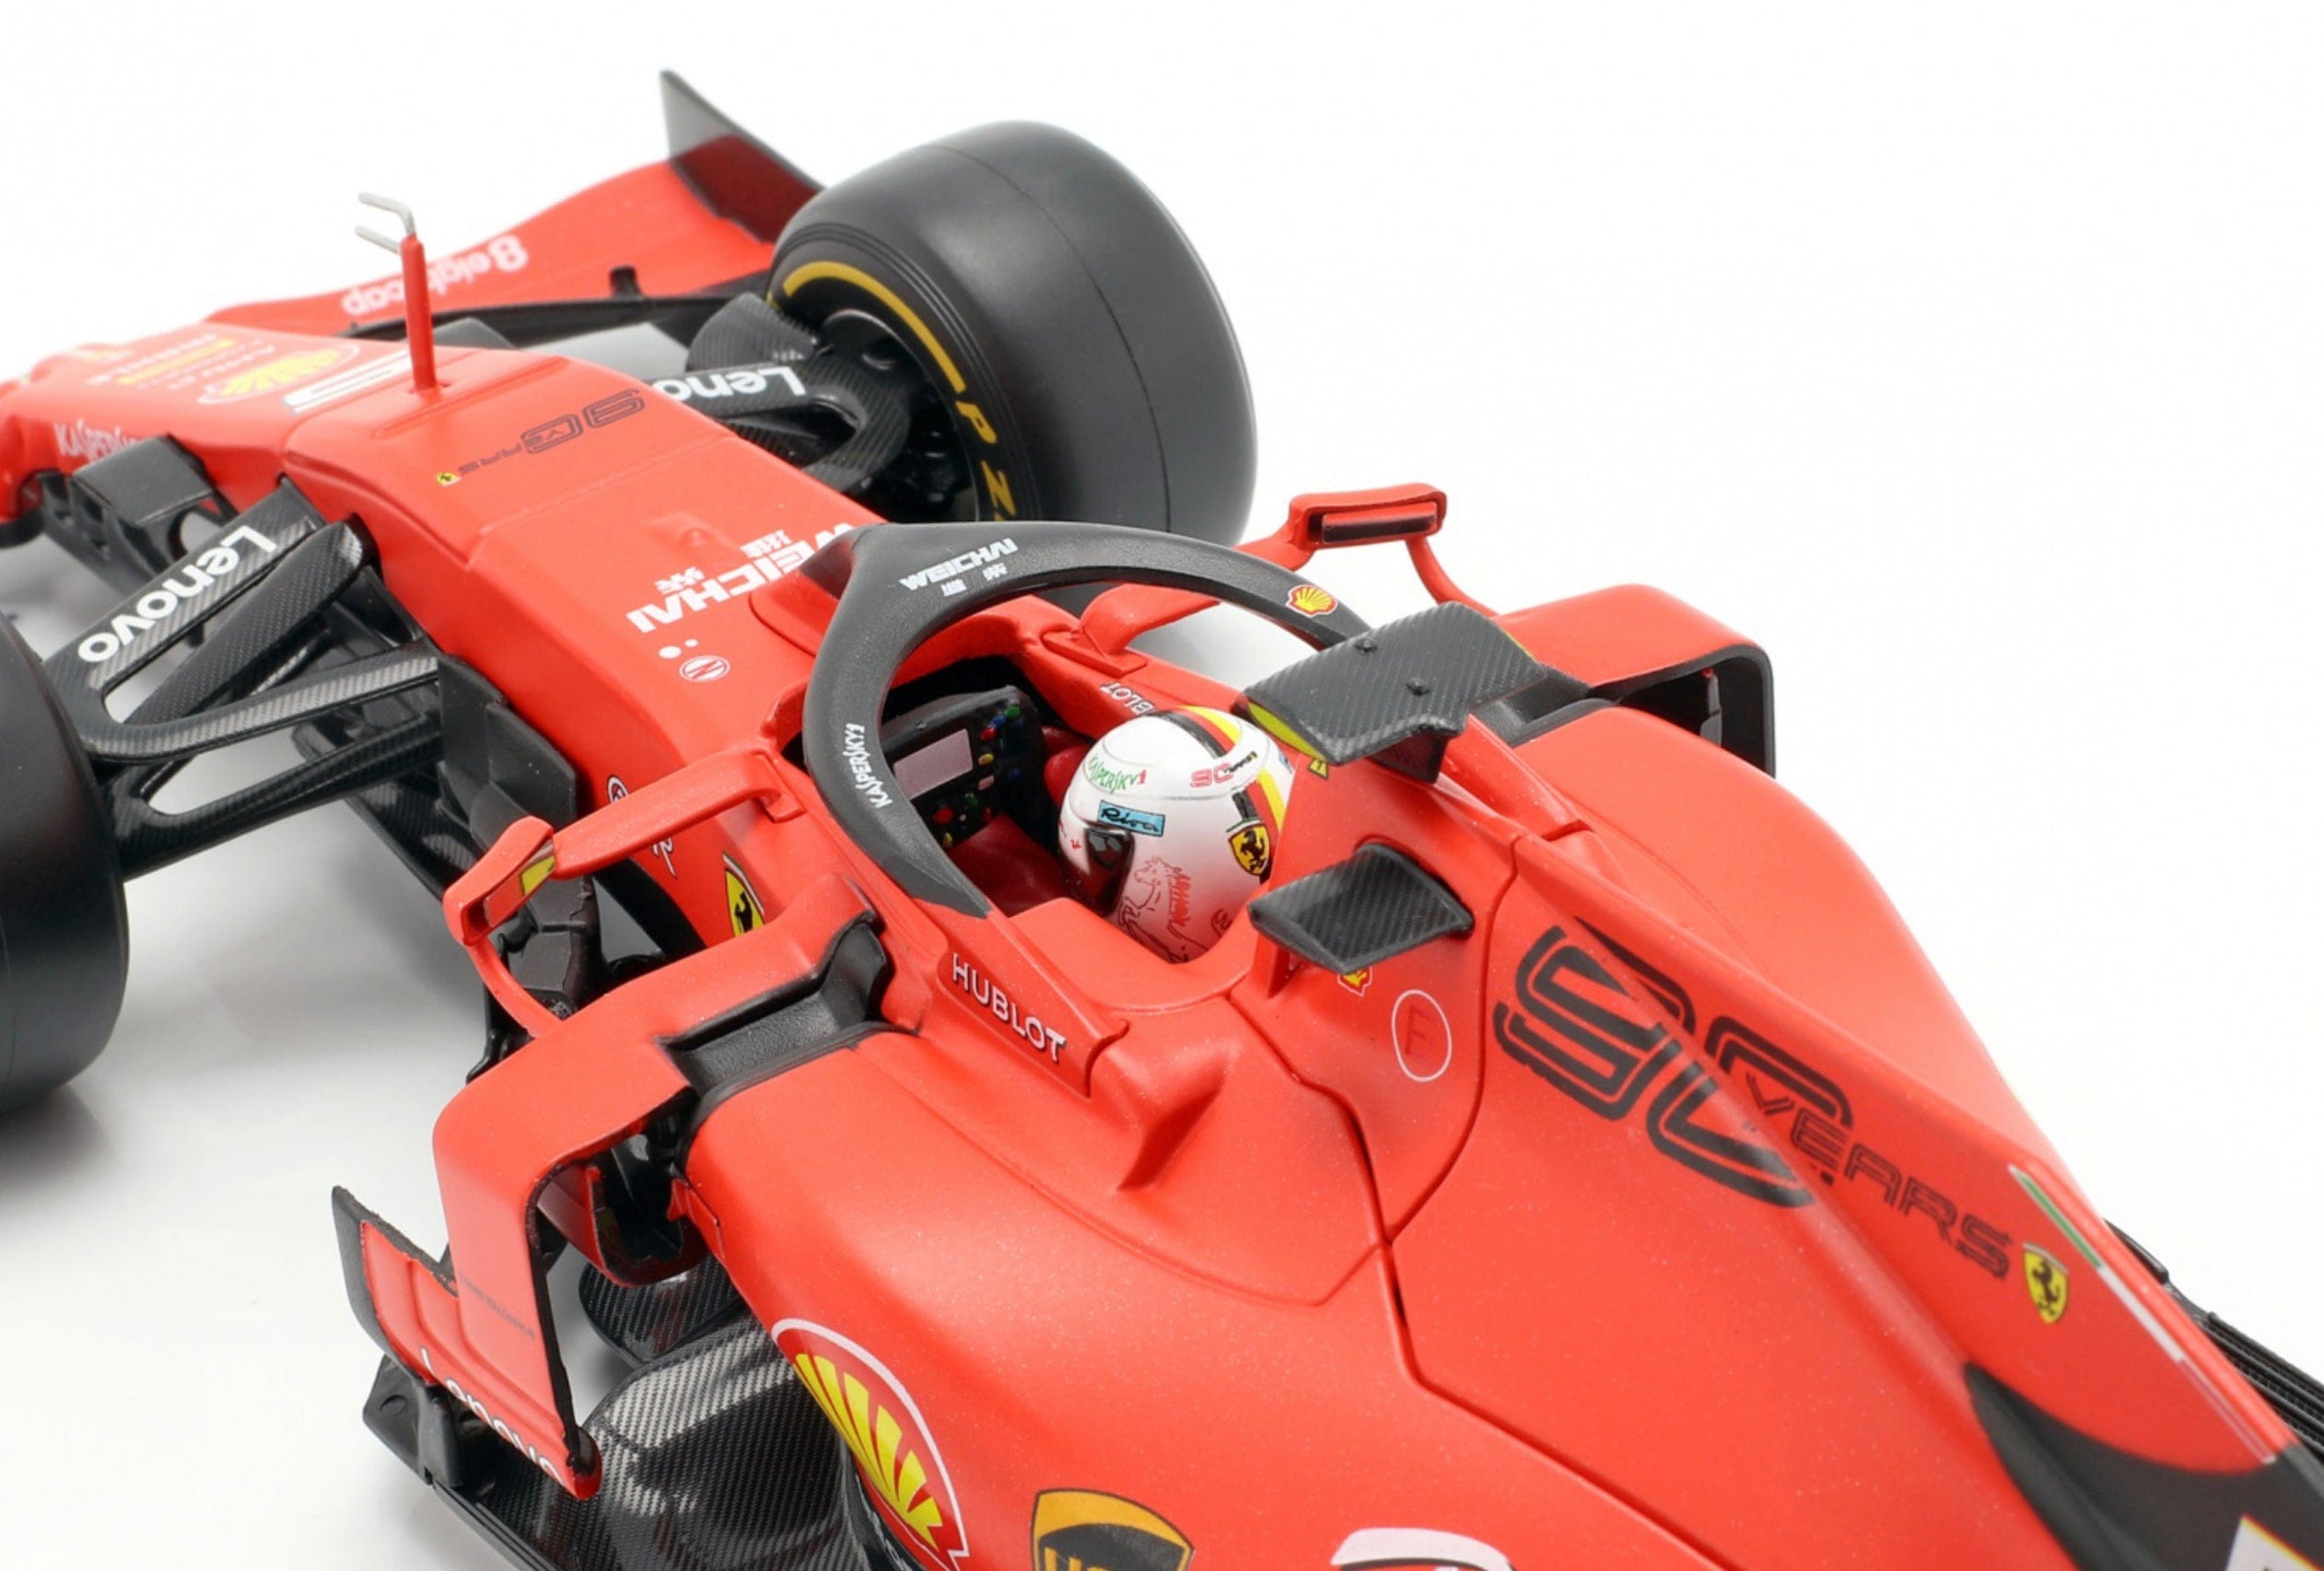 Ferrari SF90 Sebastian Vettel 2019 - Diecast Model Bburago